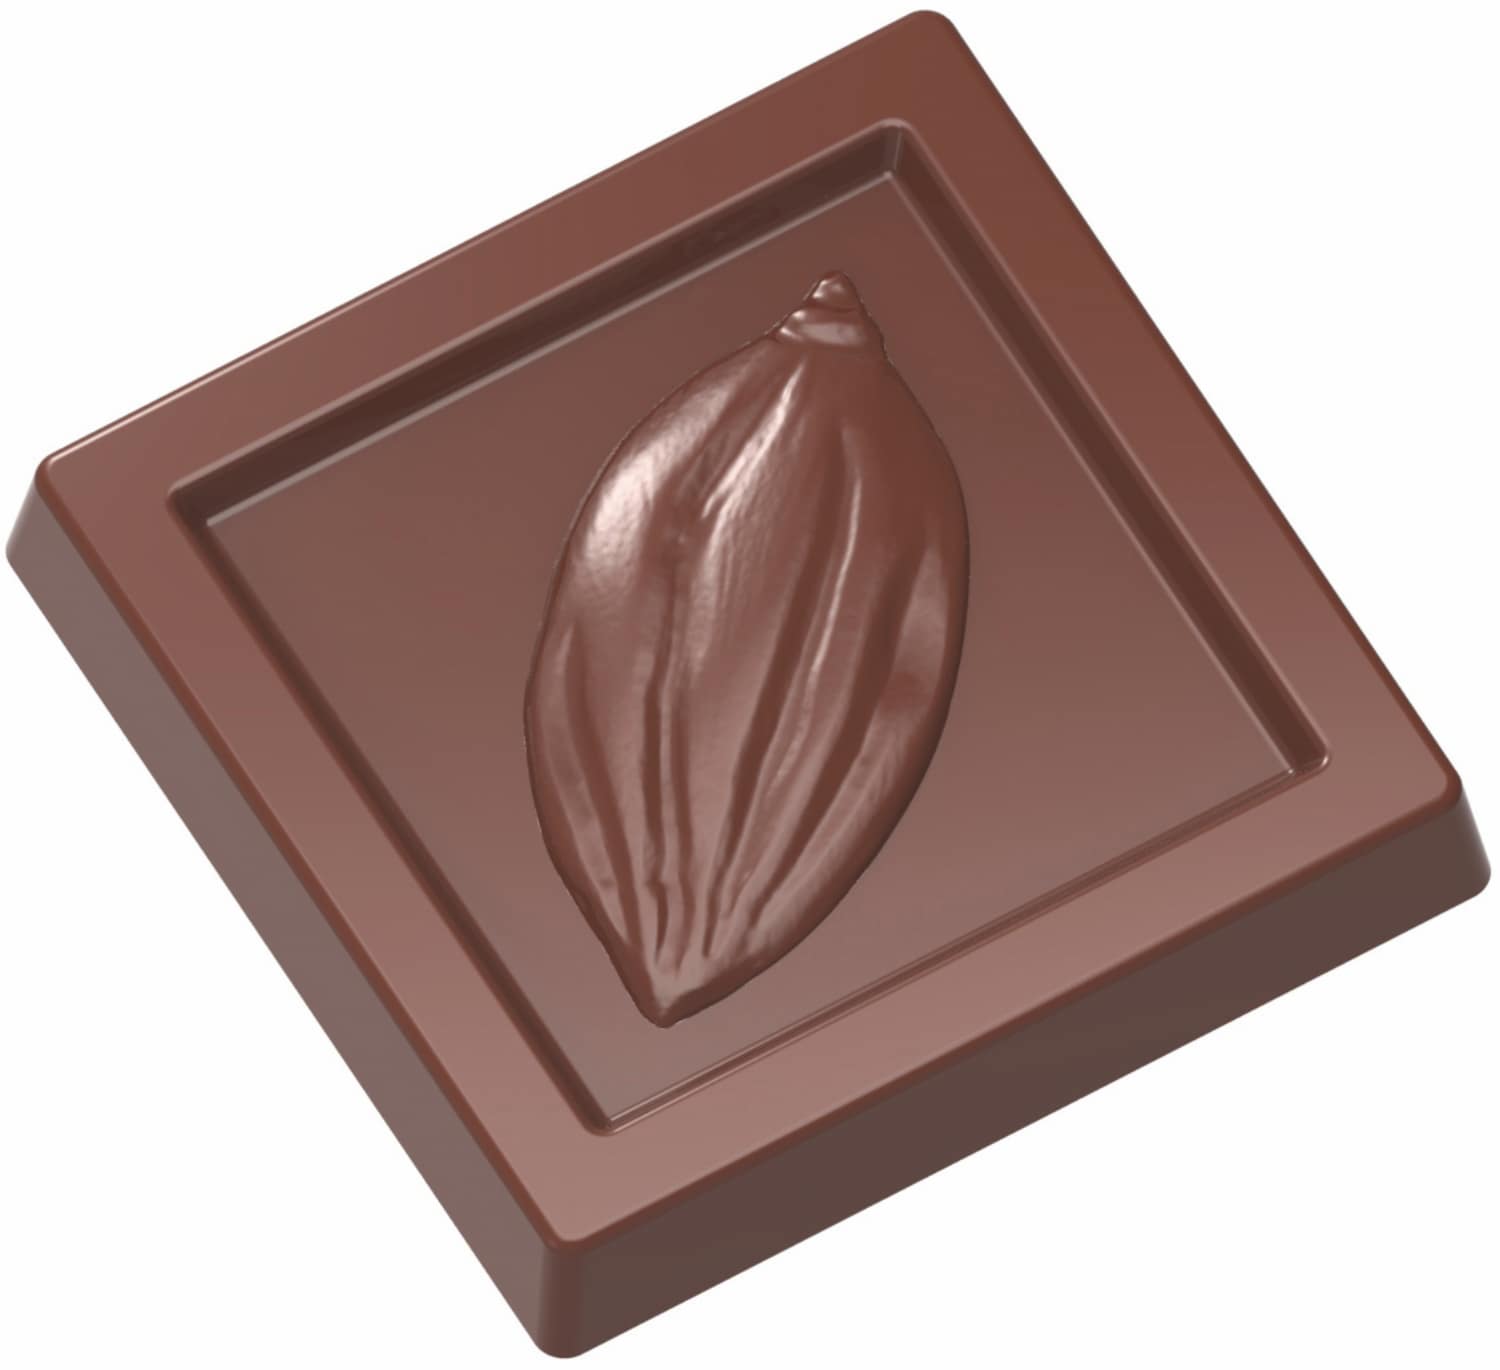 Chocolate mould "Cocoa bean" 421901 421901